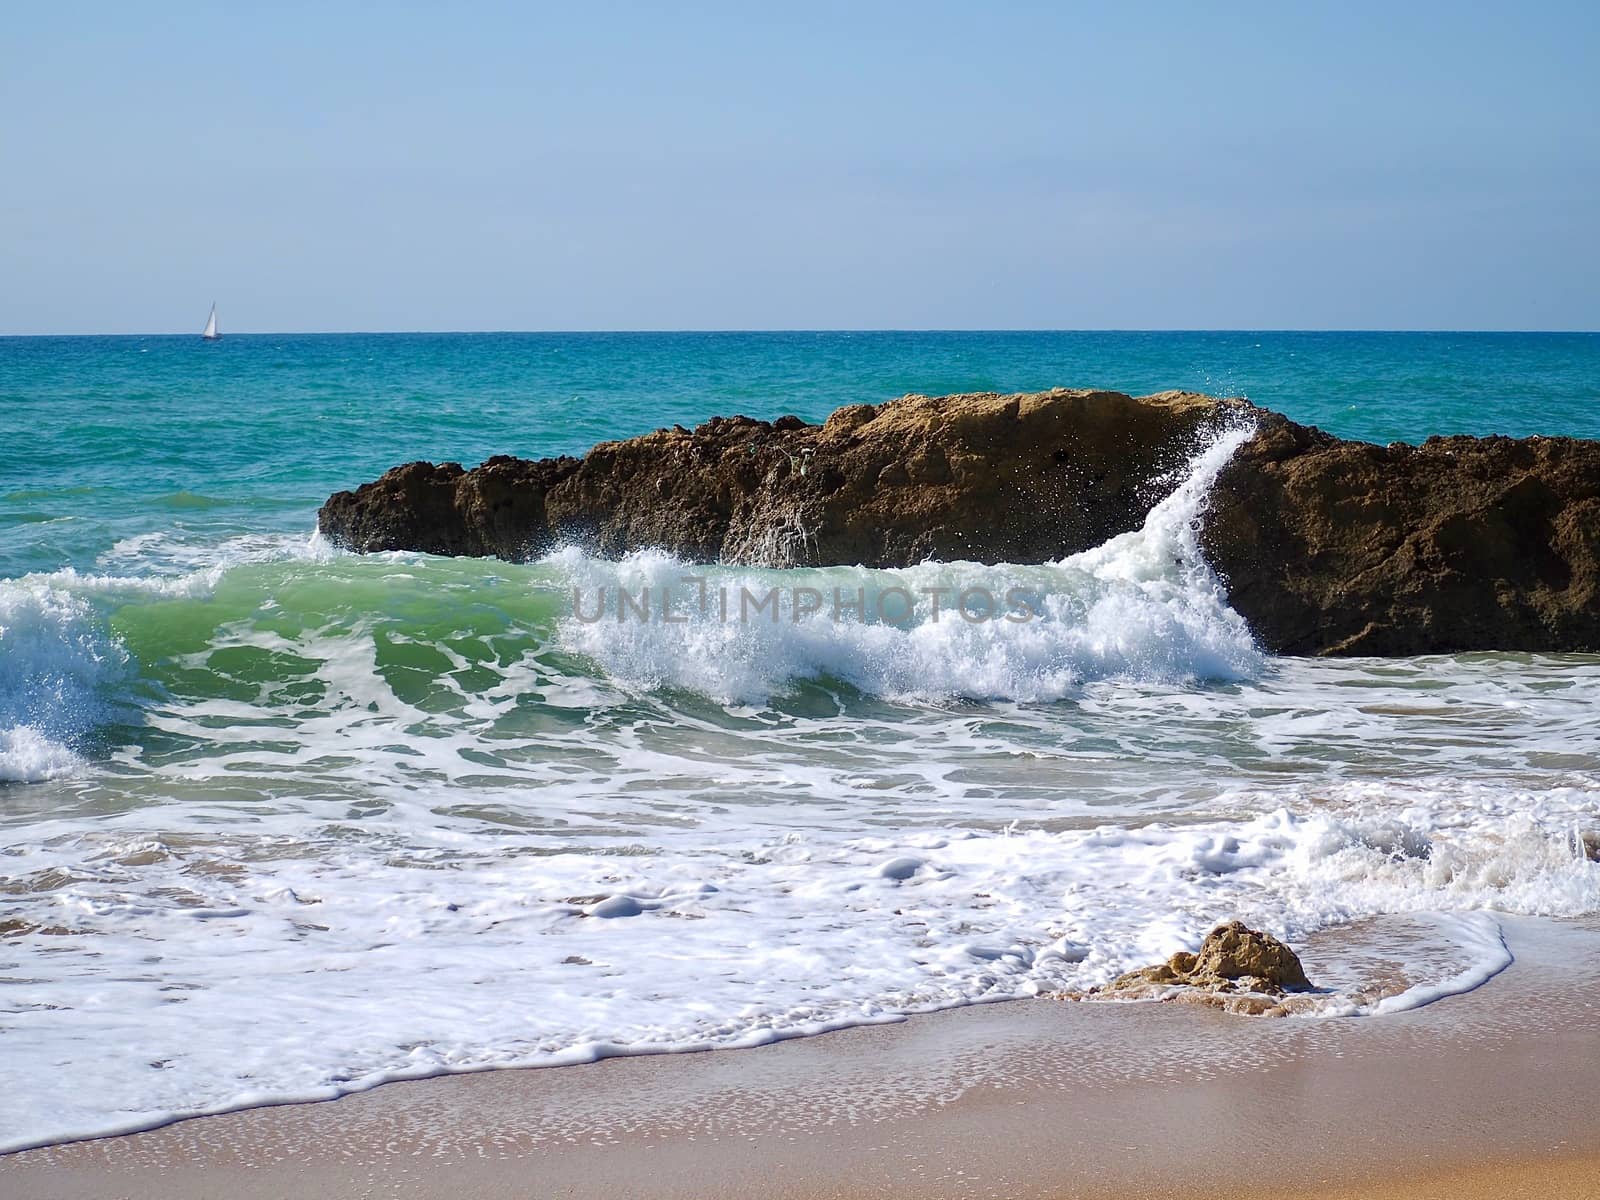 Nature photo of rocks with waves in blue ocean by Stimmungsbilder